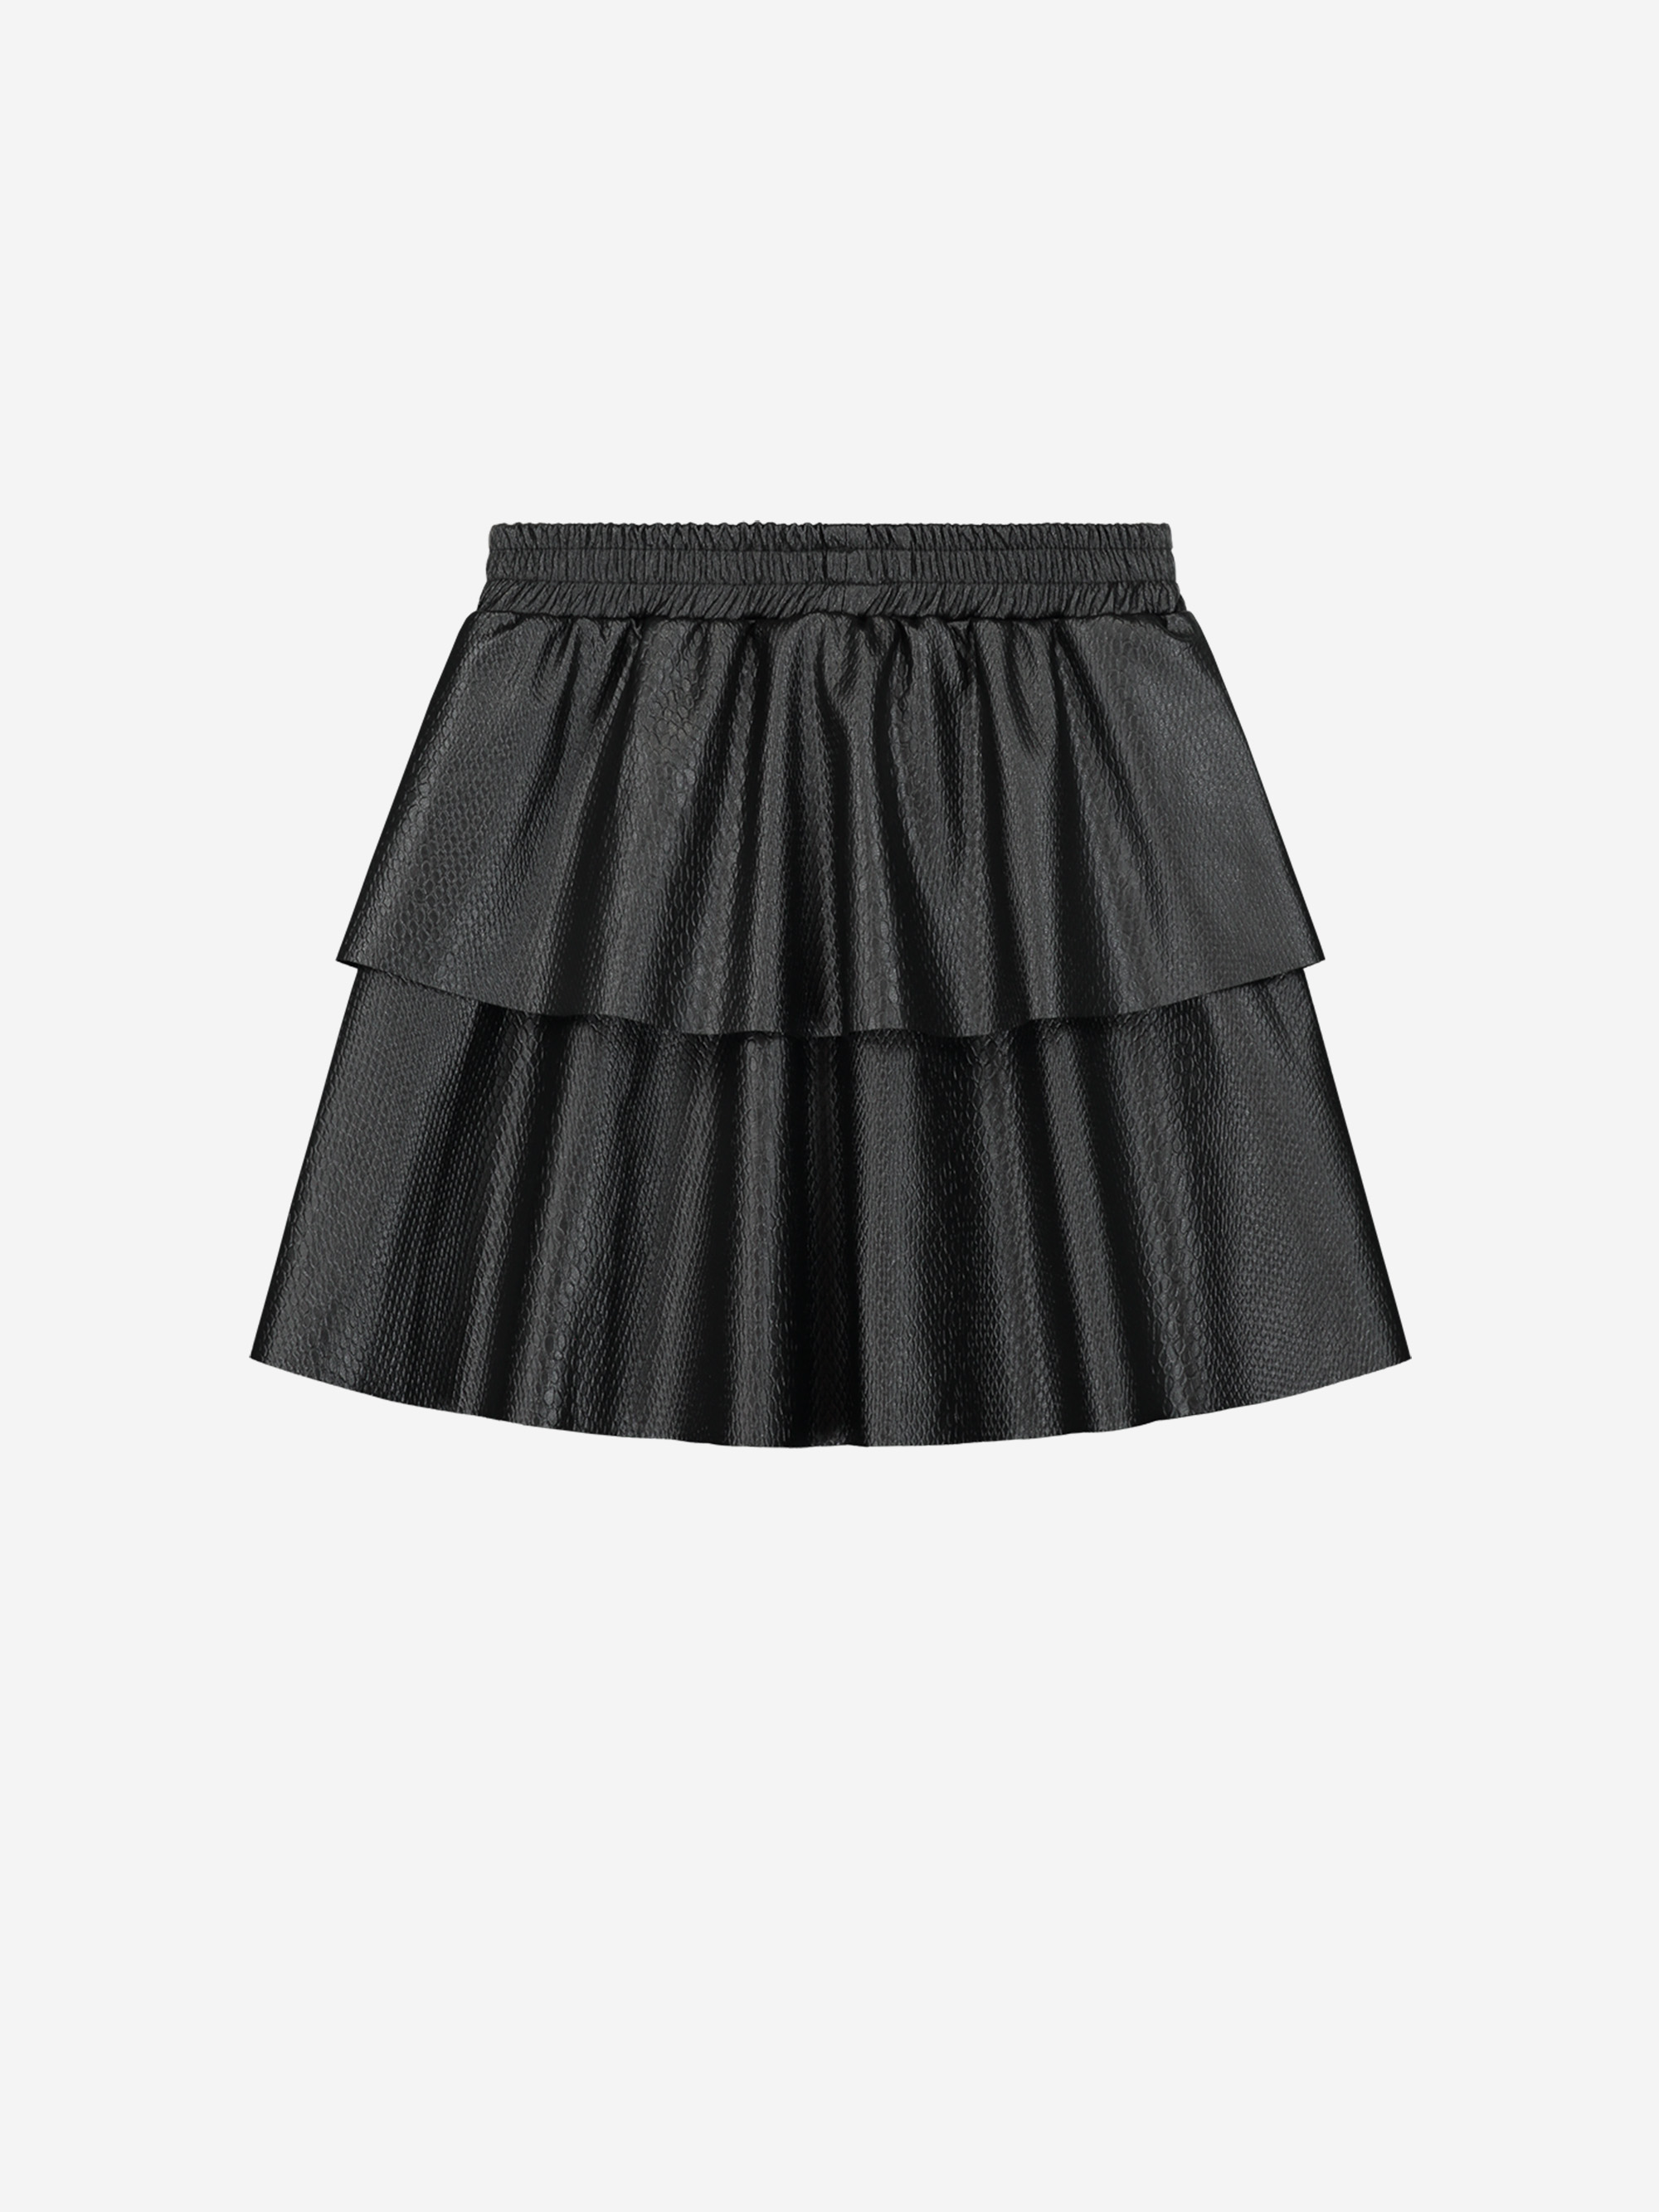 Croco skirt with ruffles